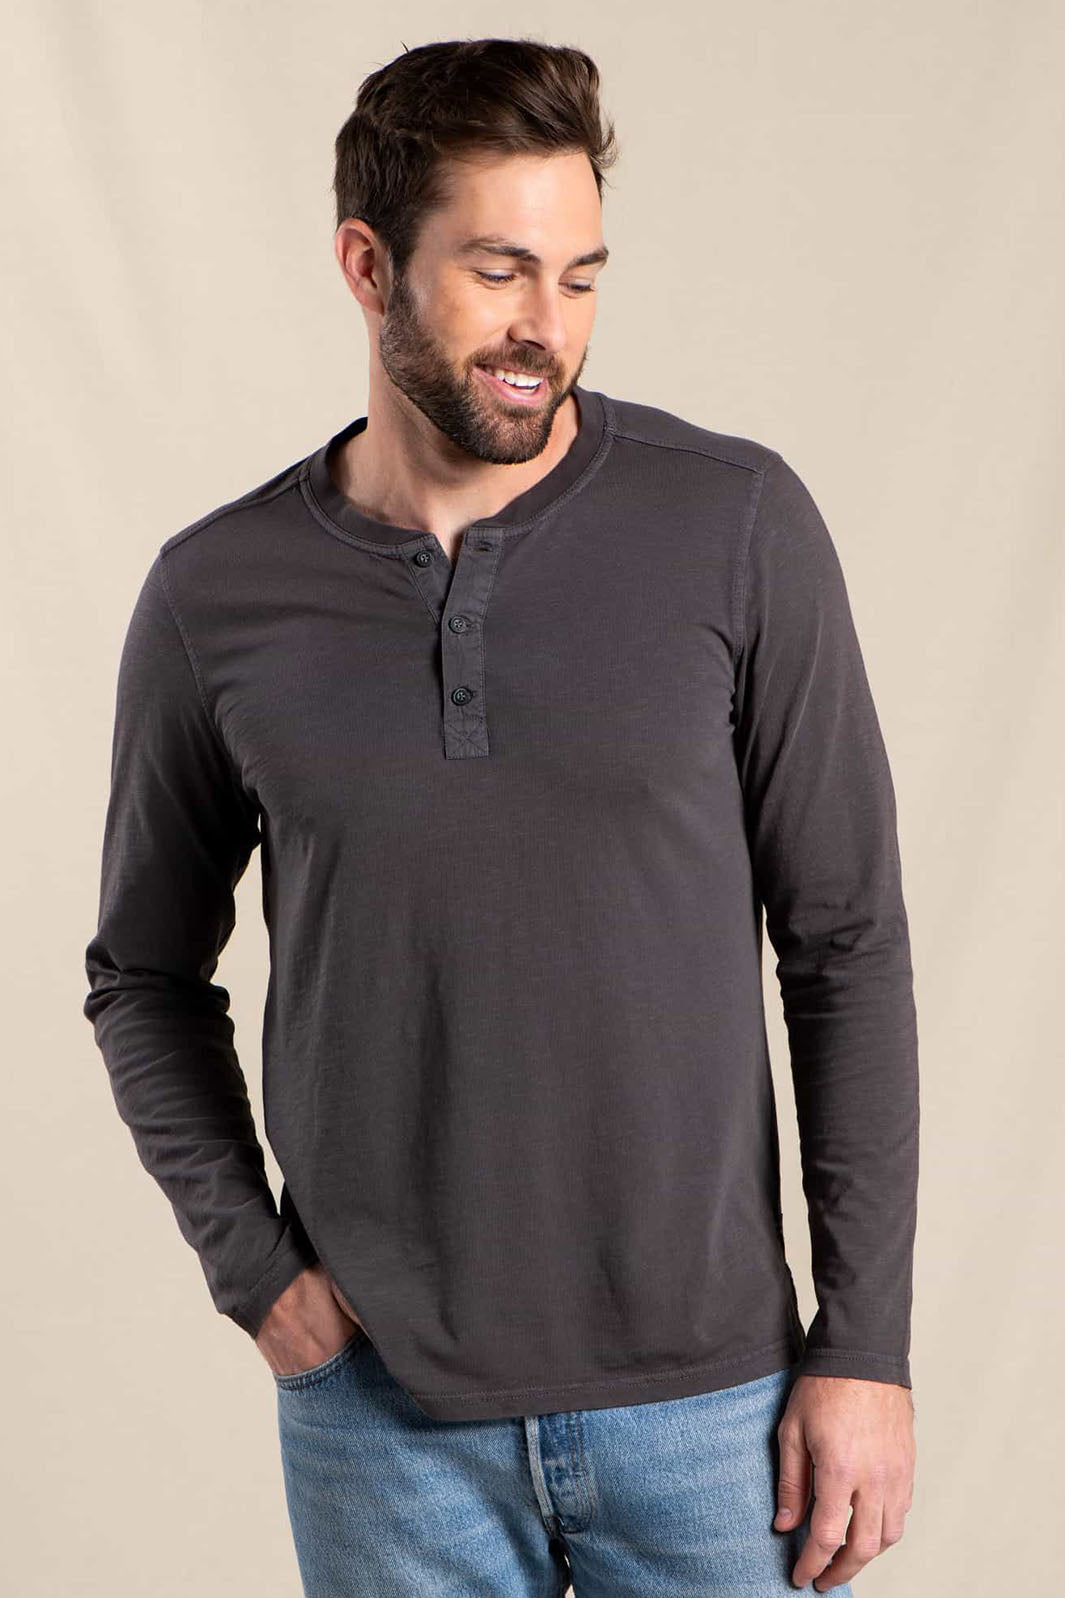 Men's Primo Short Sleeve Henley Shirt